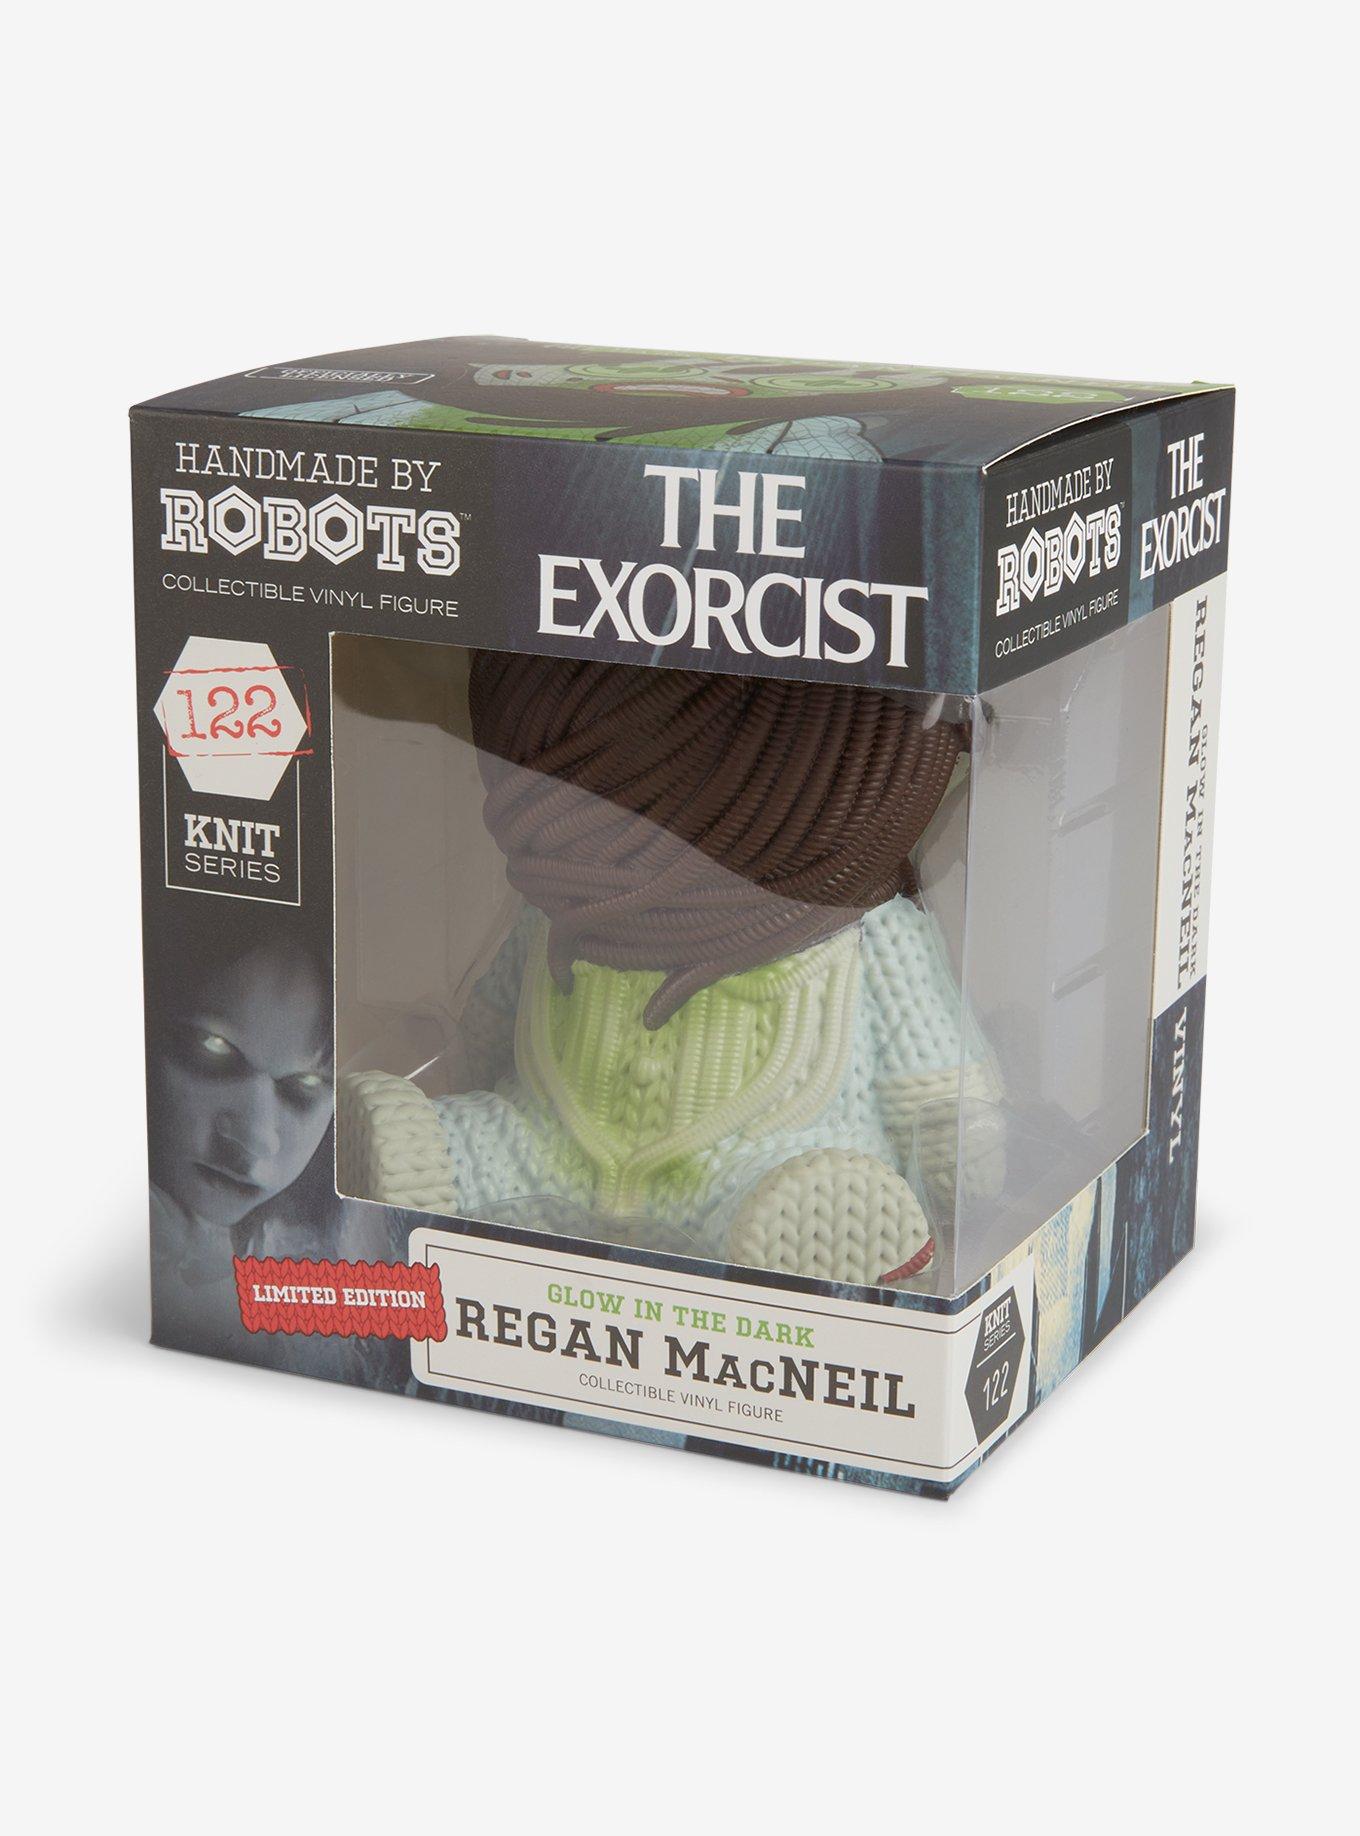 Handmade By Robots The Exorcist Knit Series Regan MacNeil Glow-In-The-Dark Vinyl Figure